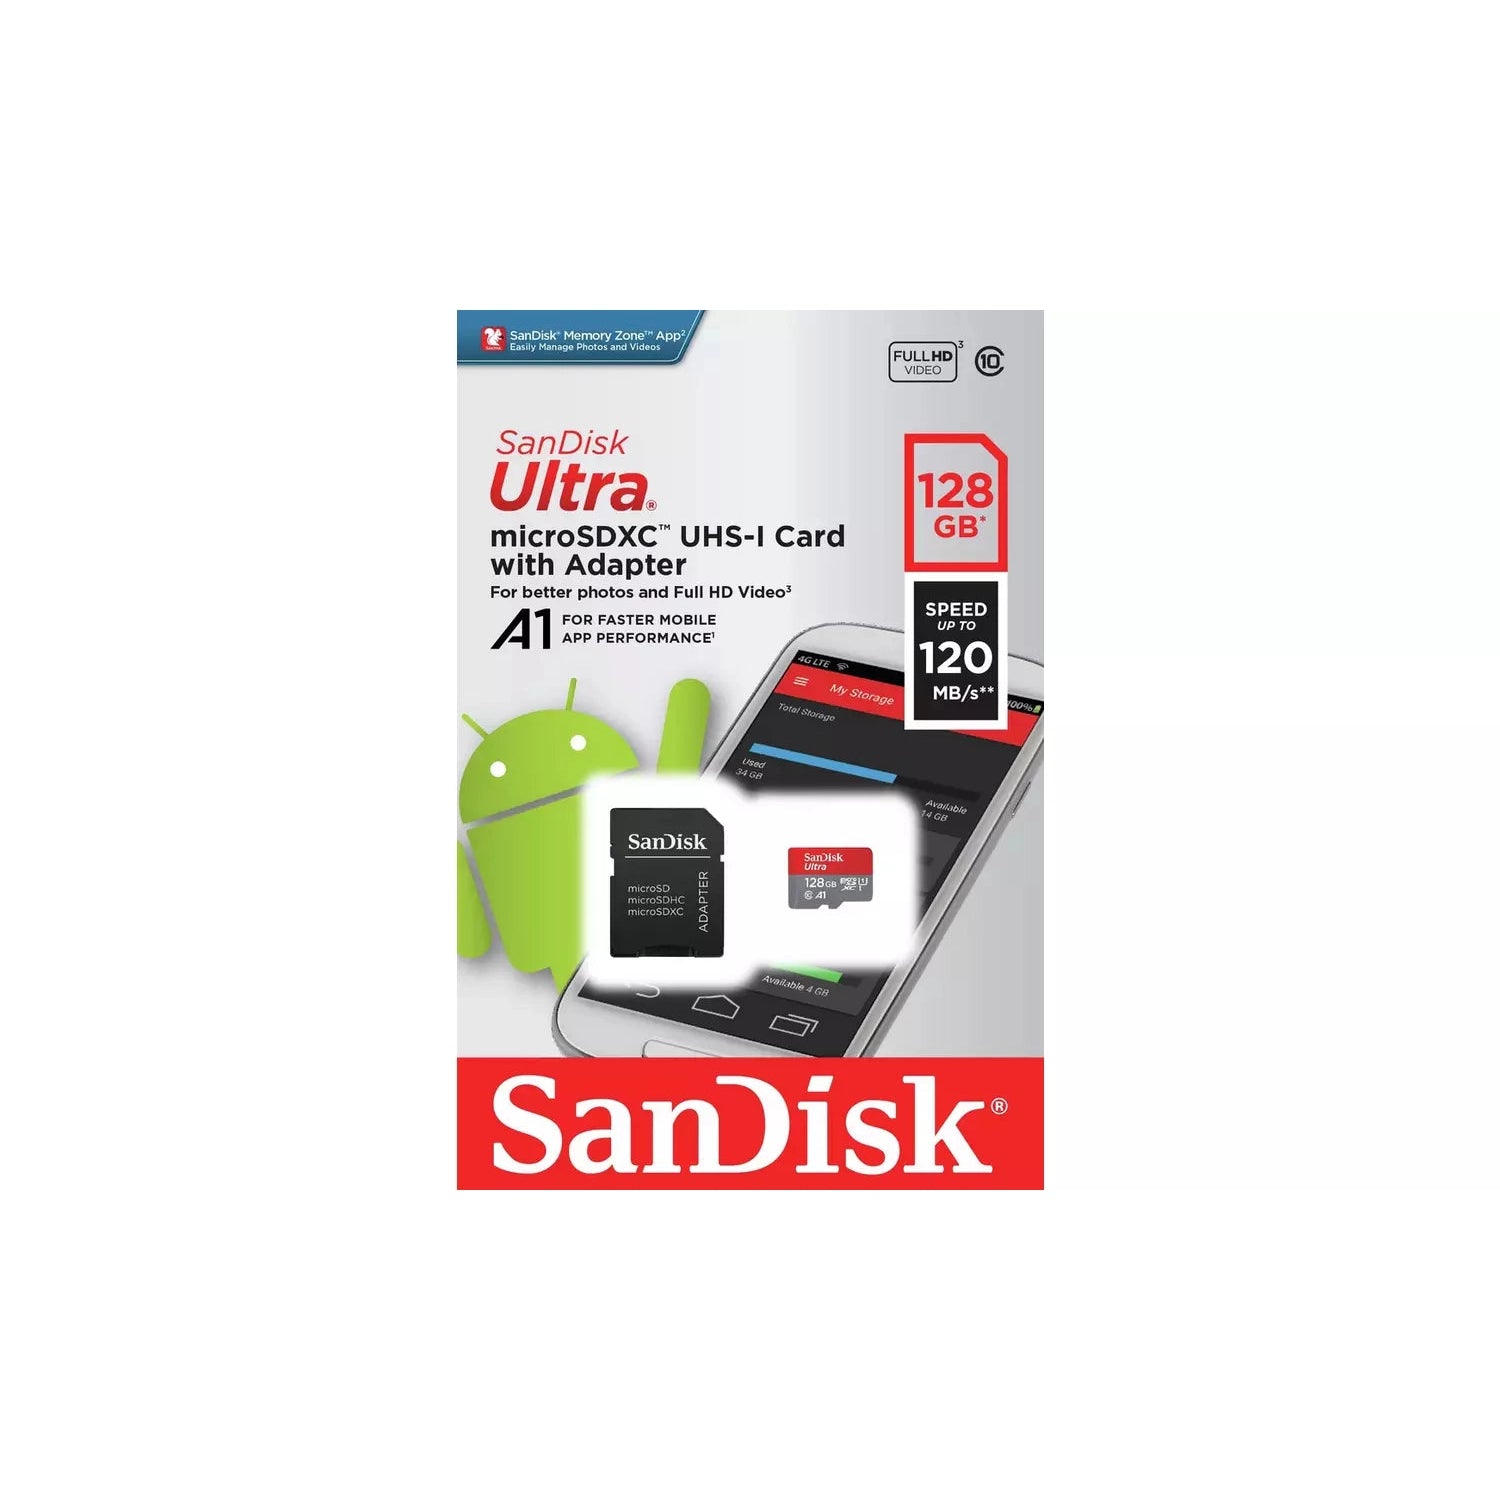 SanDisk Ultra 120MBs microSDHC UHS-I Memory Card - 128GB